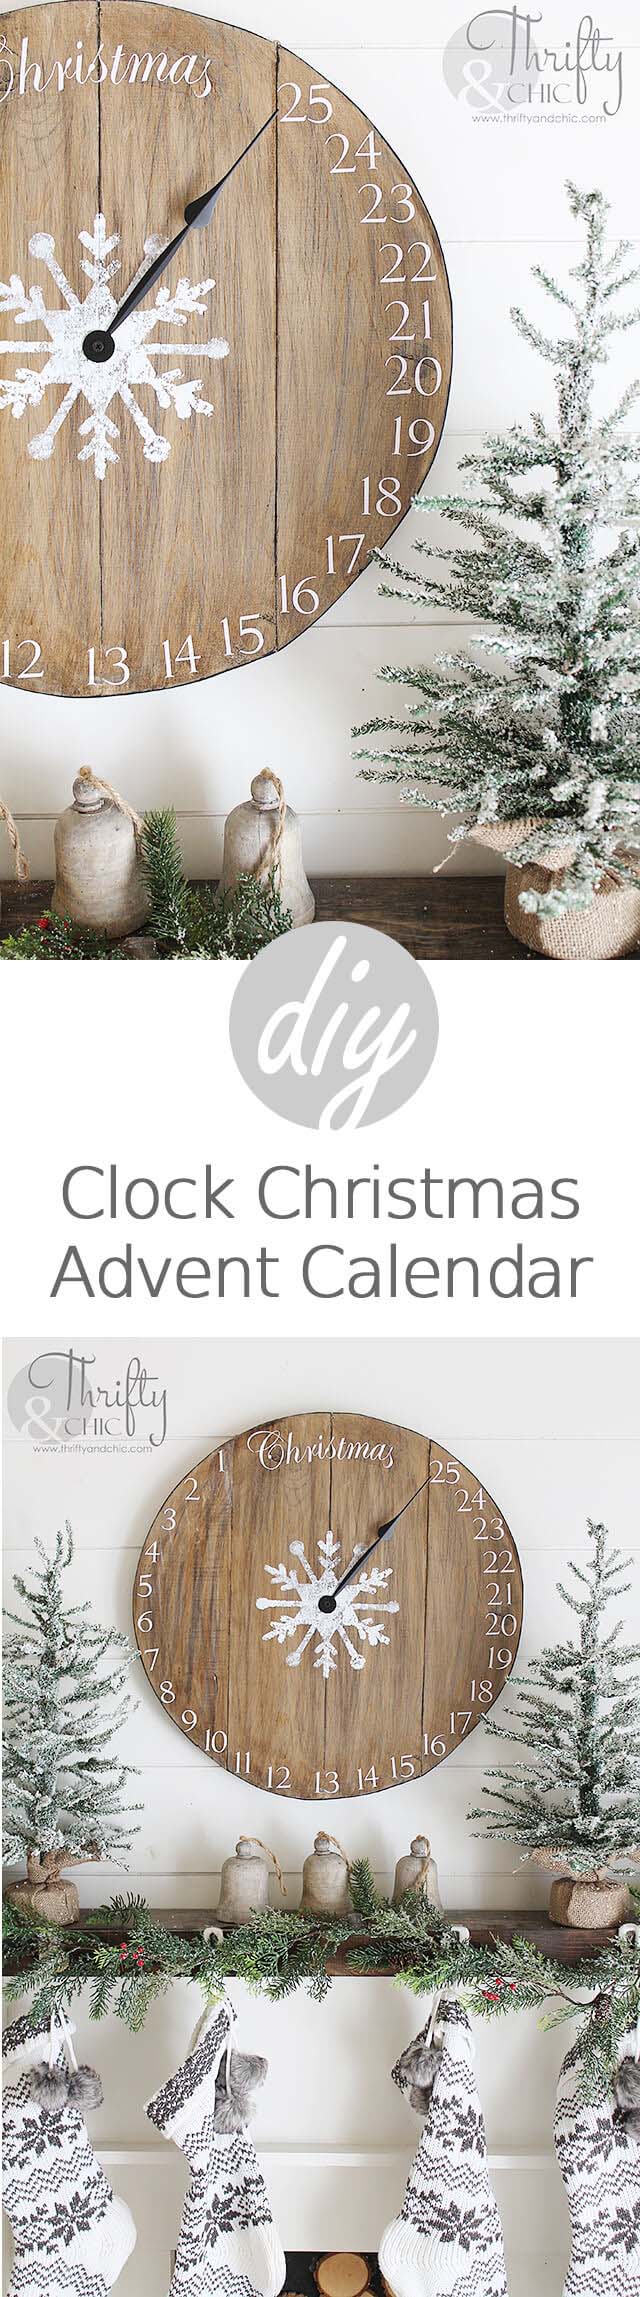 DIY Wood Clock Christmas Advent Calendar #Christmas #crafts #decorations #decorhomeideas